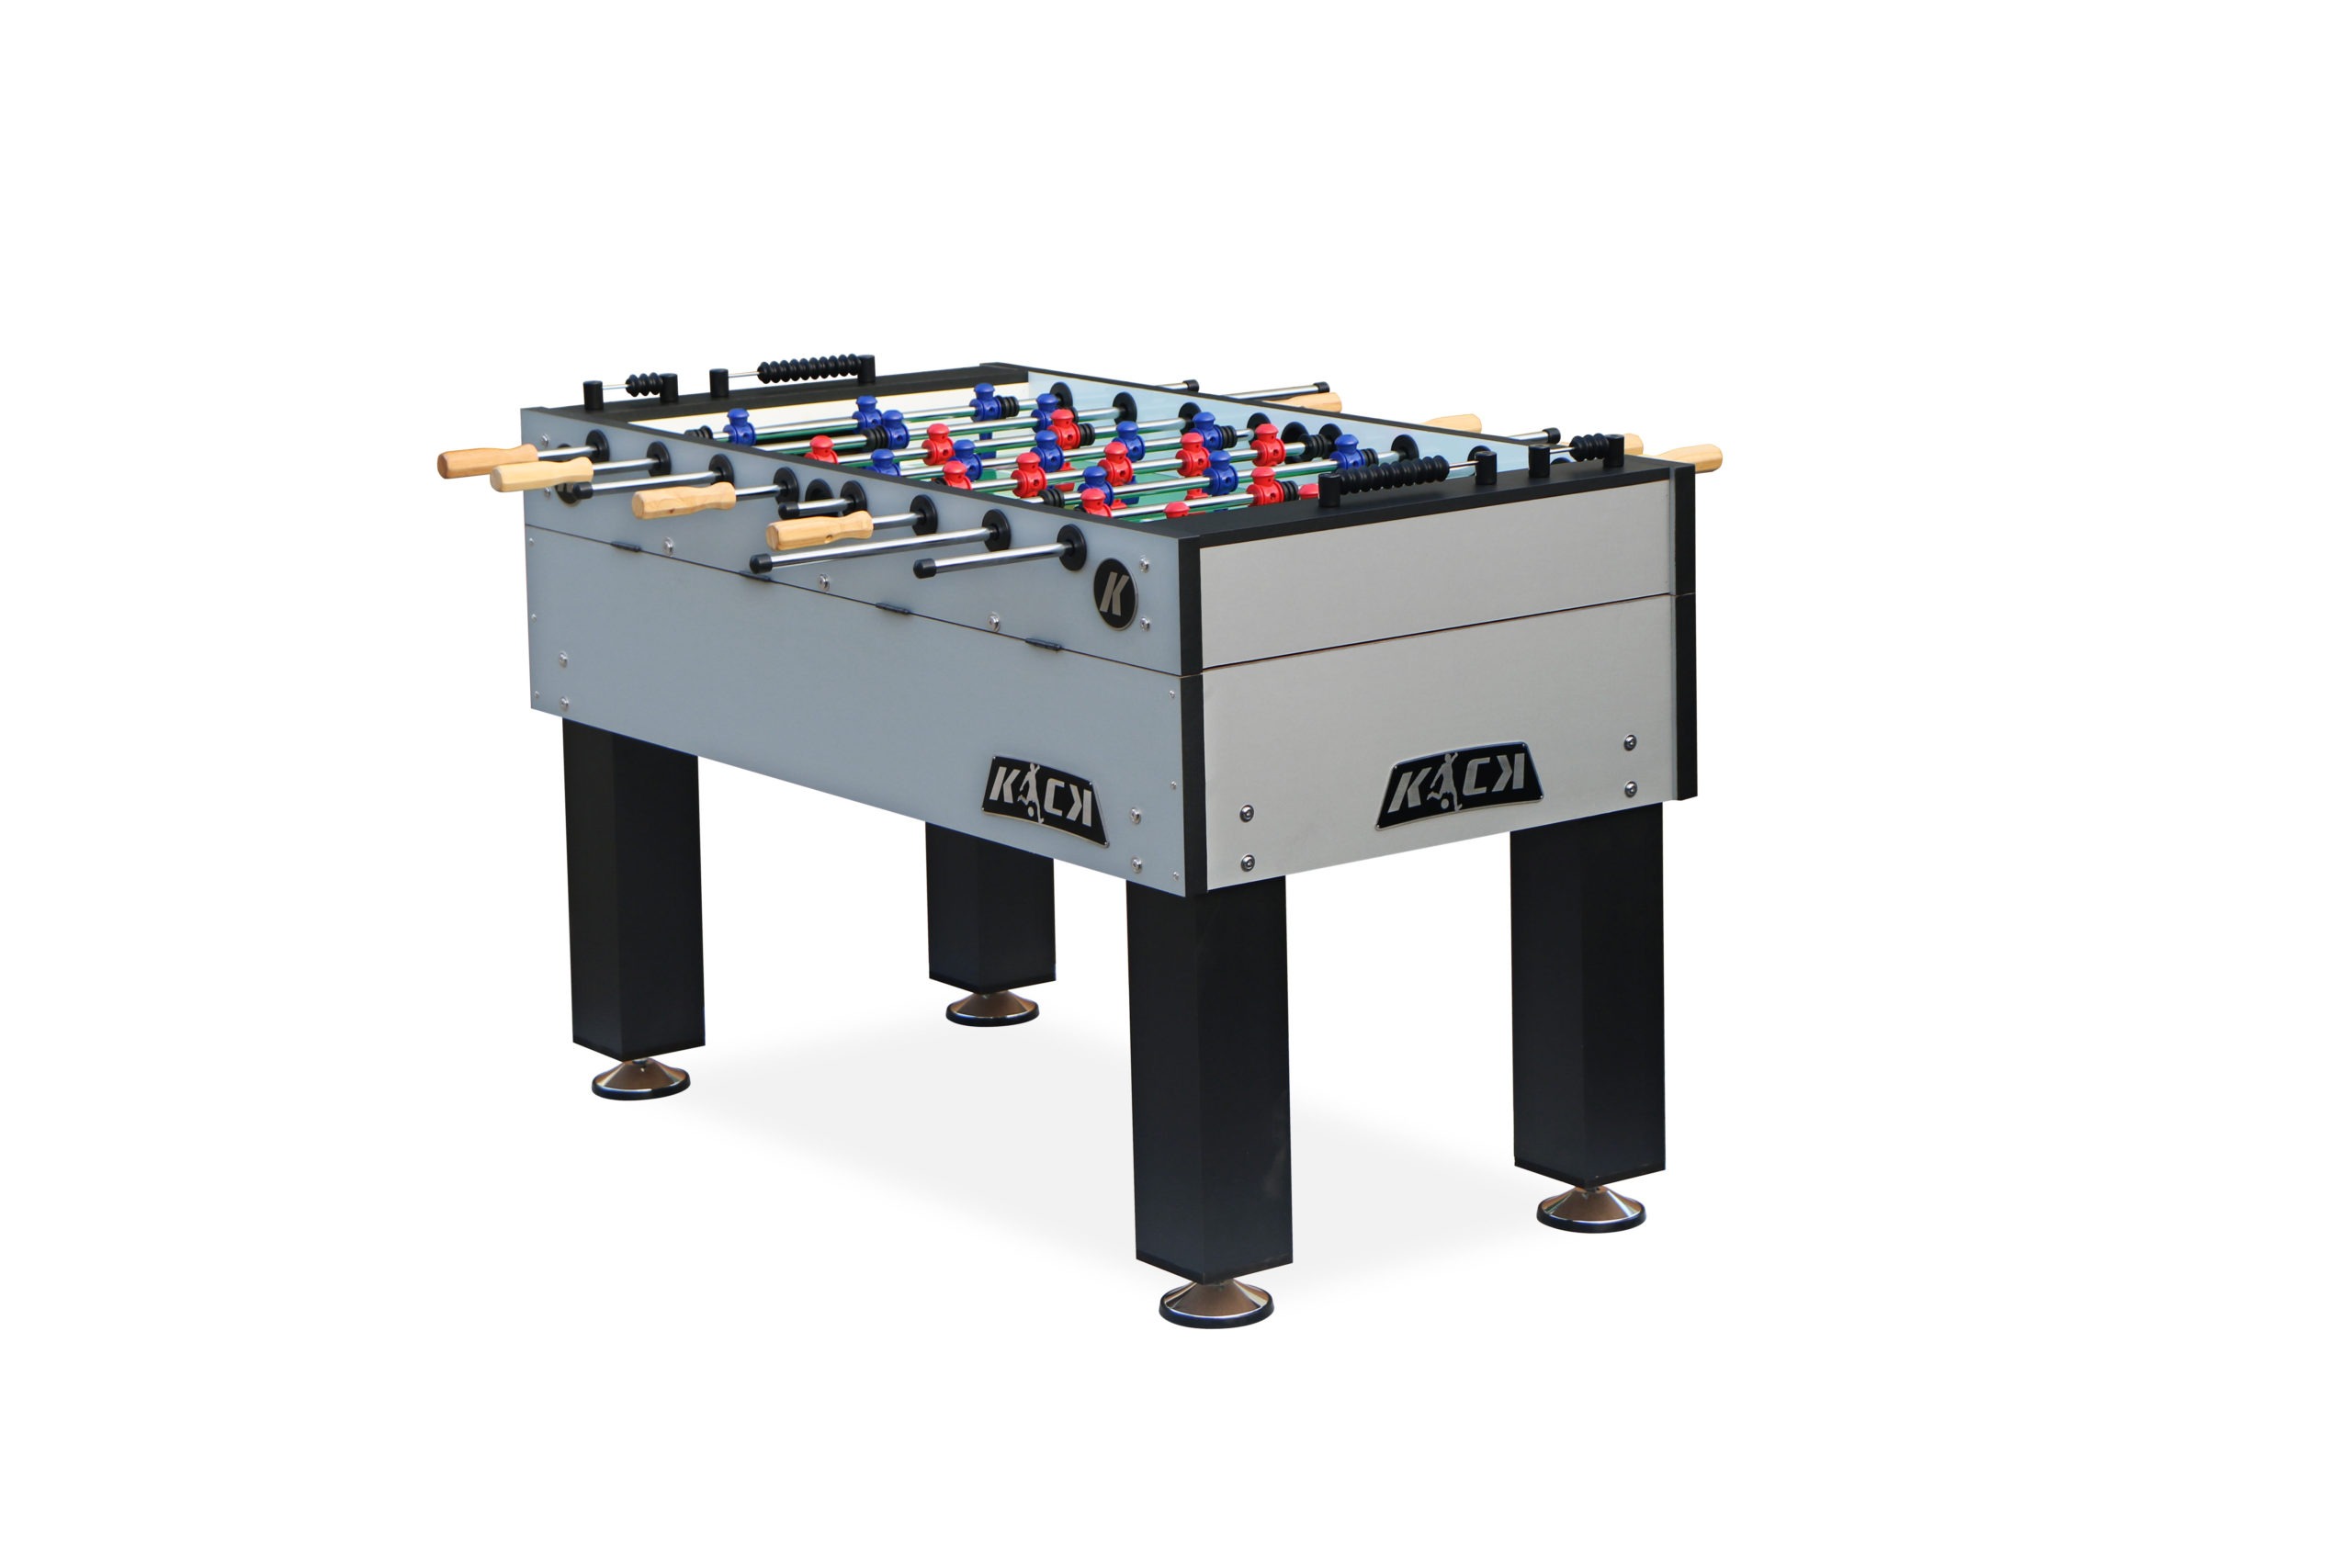 Kick Titan 55 In Tournament Foosball Table Arcade Table Games Foosball Oneinfive Com Au